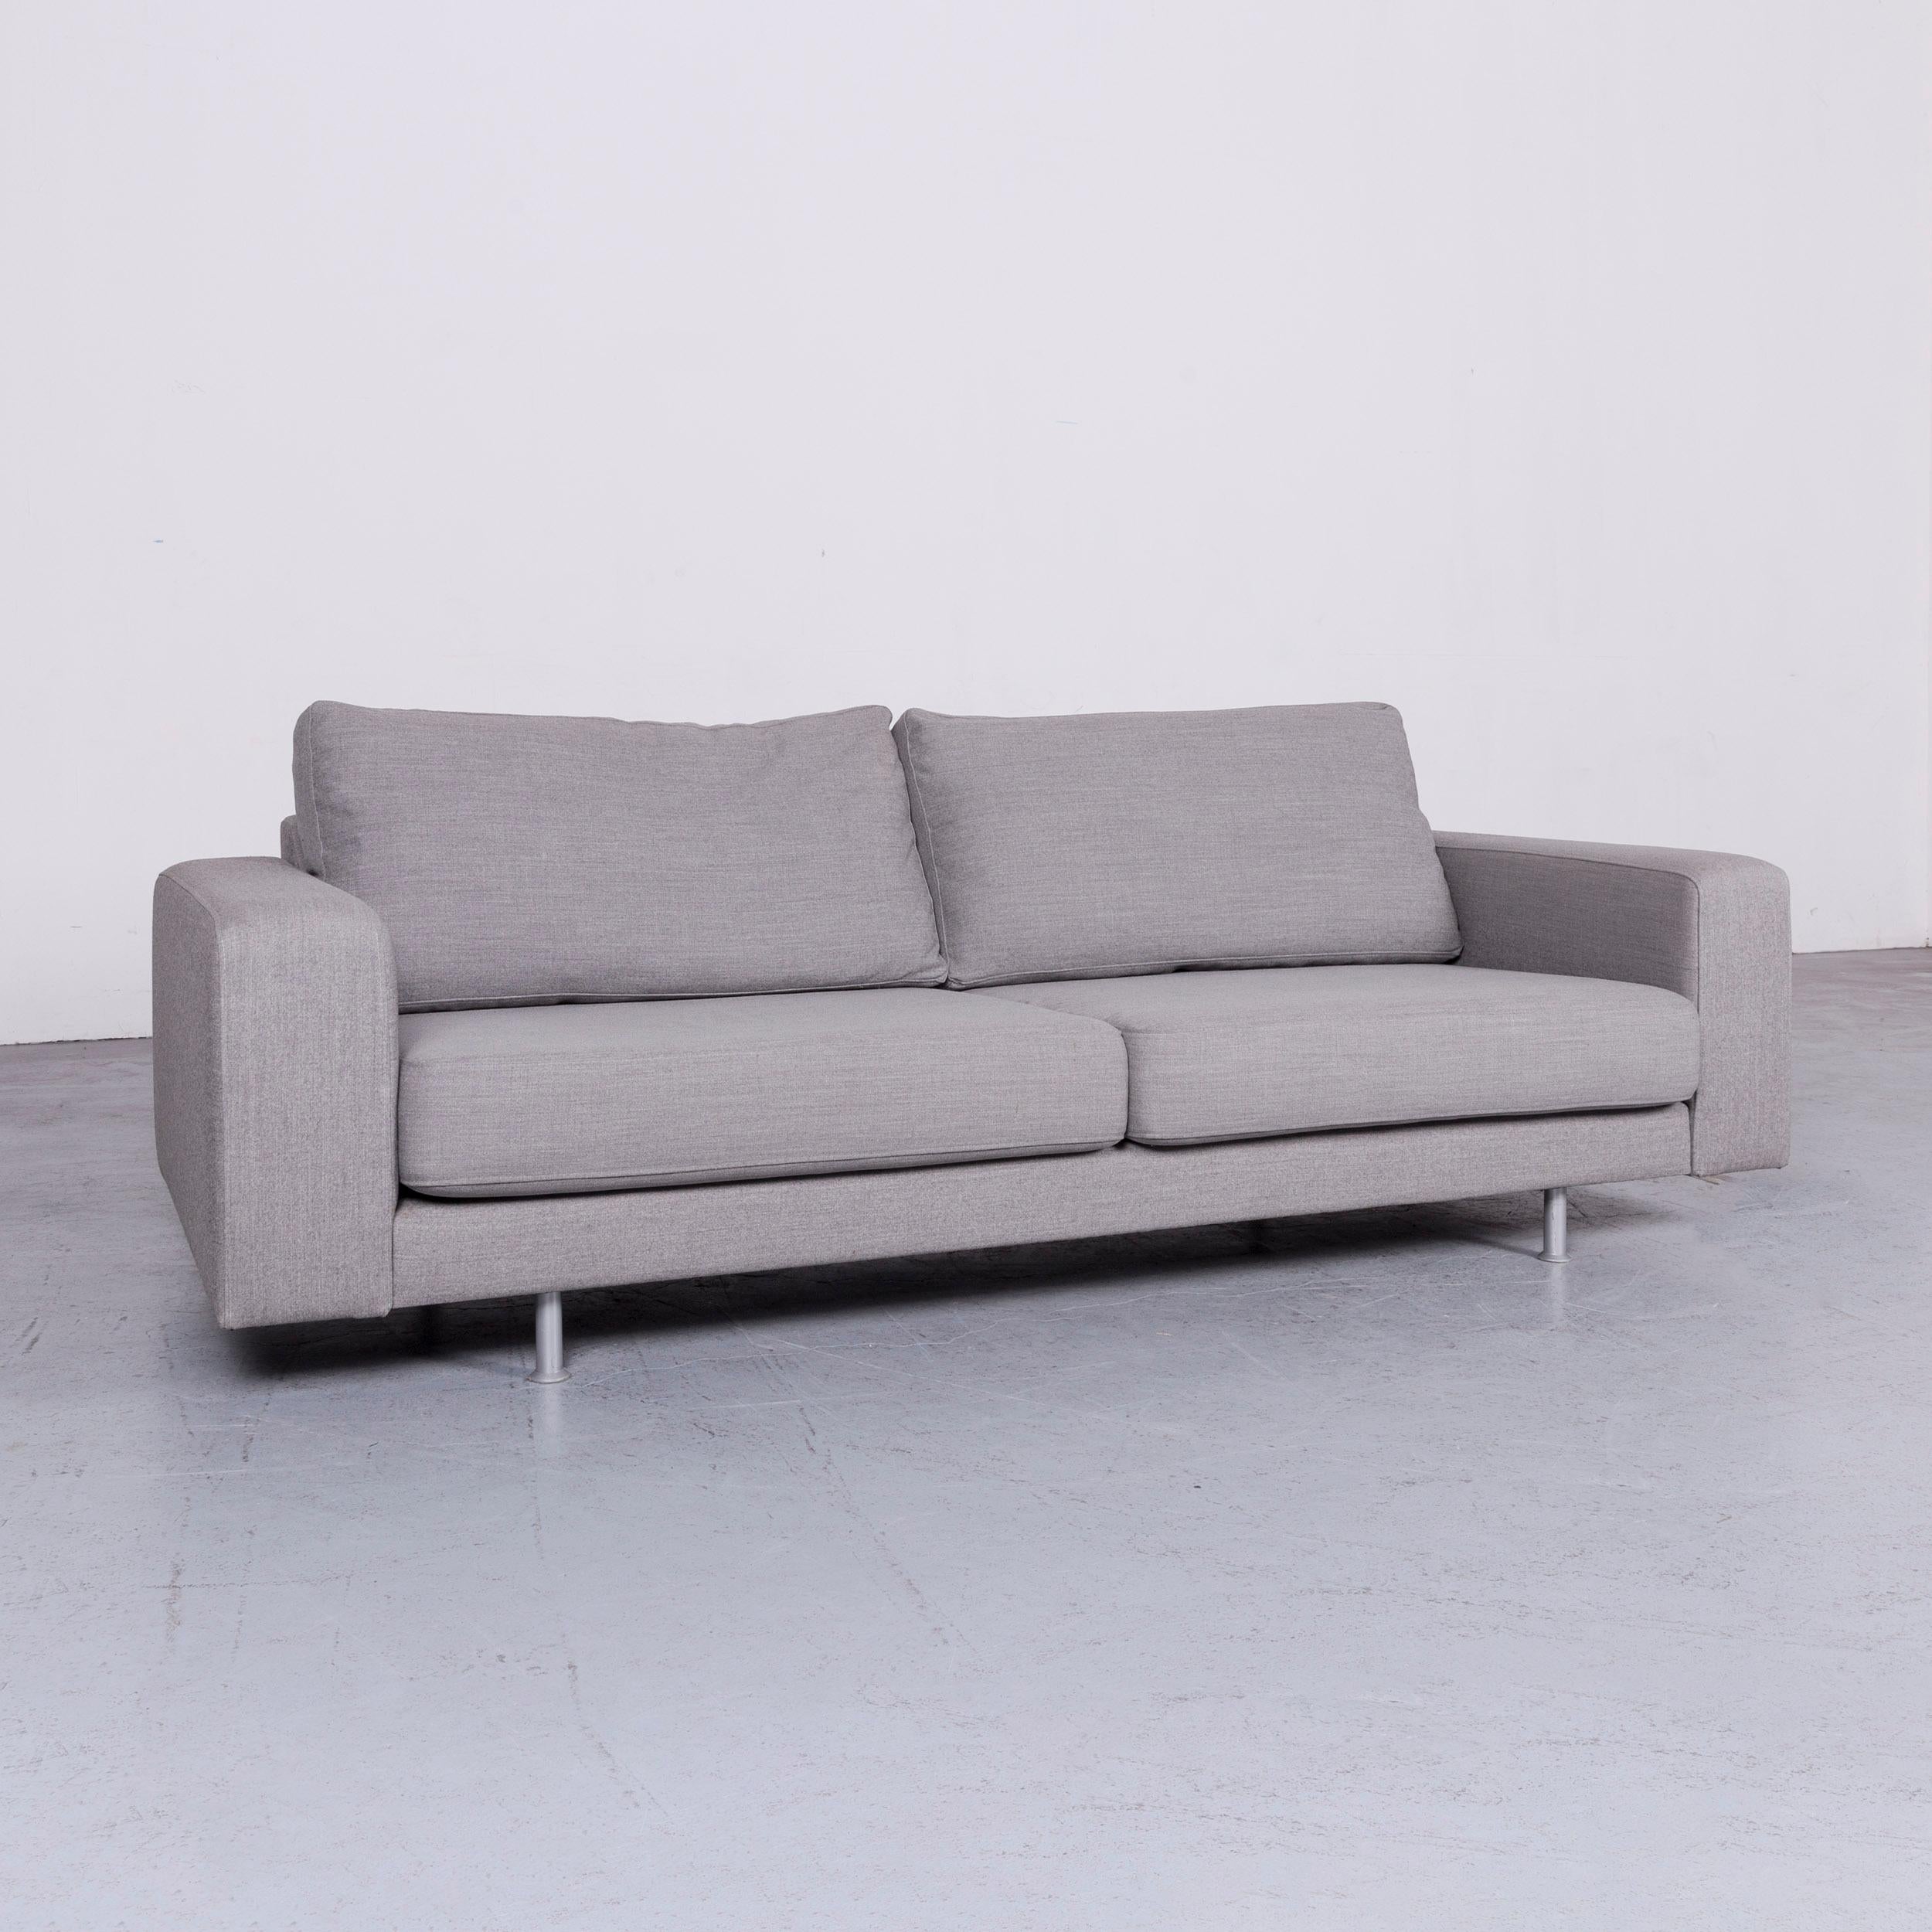 We bring to you a Pro Seda designer fabric sofa grey sofa couch modern.